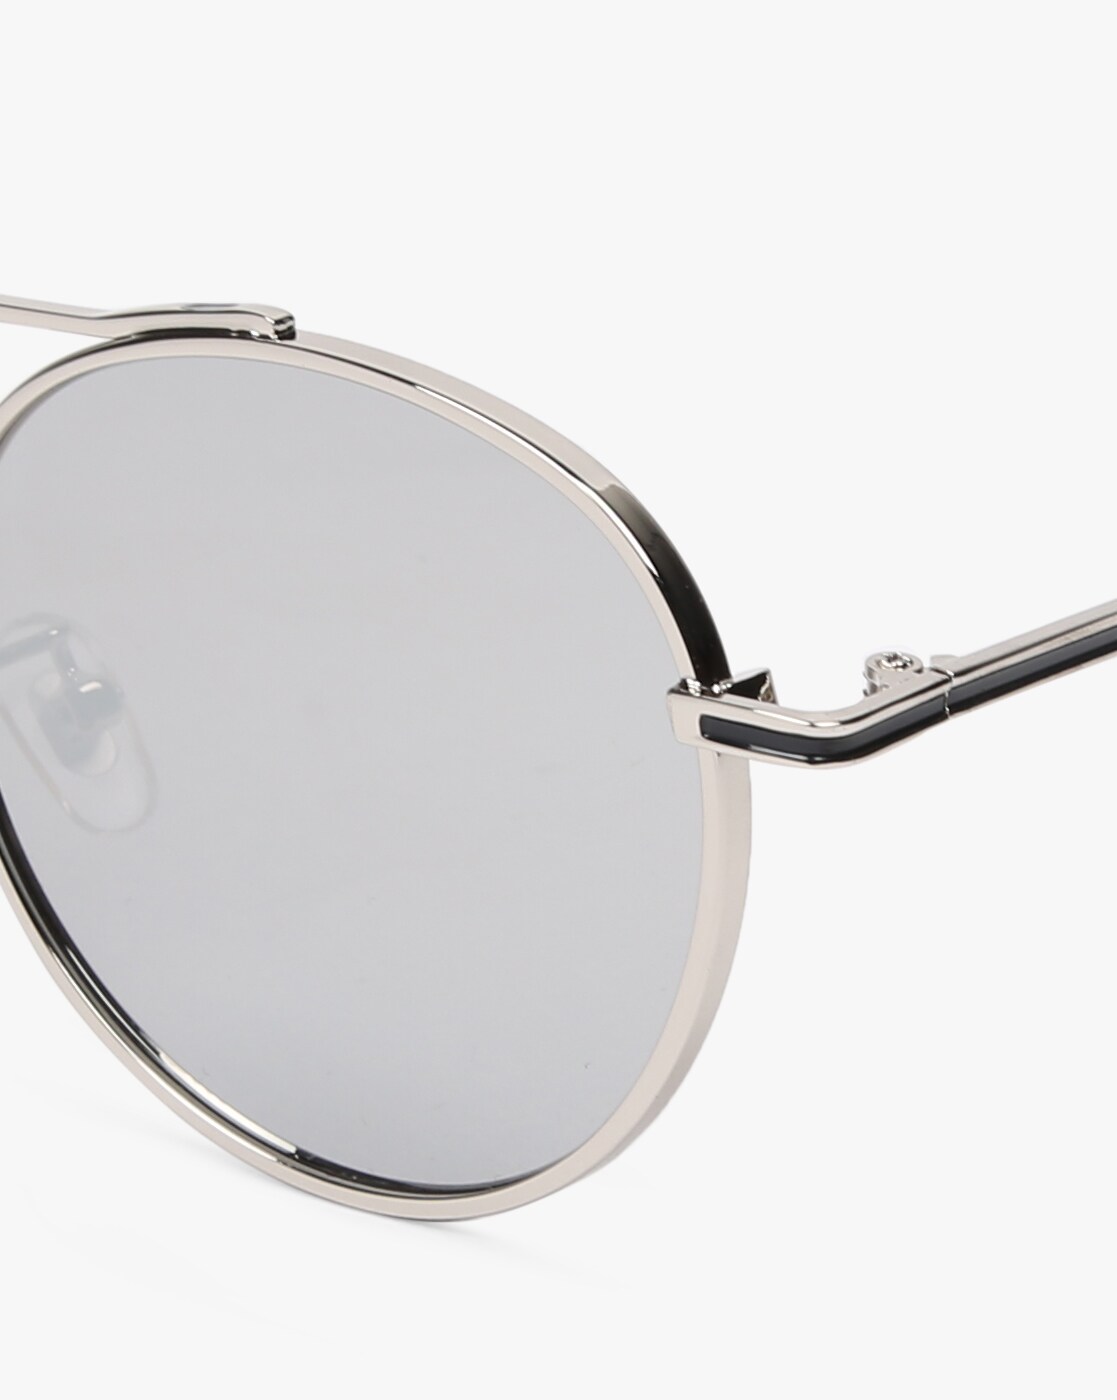 MIX Colors Sale Designer Blue Mirrored Sunglasses Men Silver Mirror Vintage  Sunglasses Women Glasses Hot | Wish